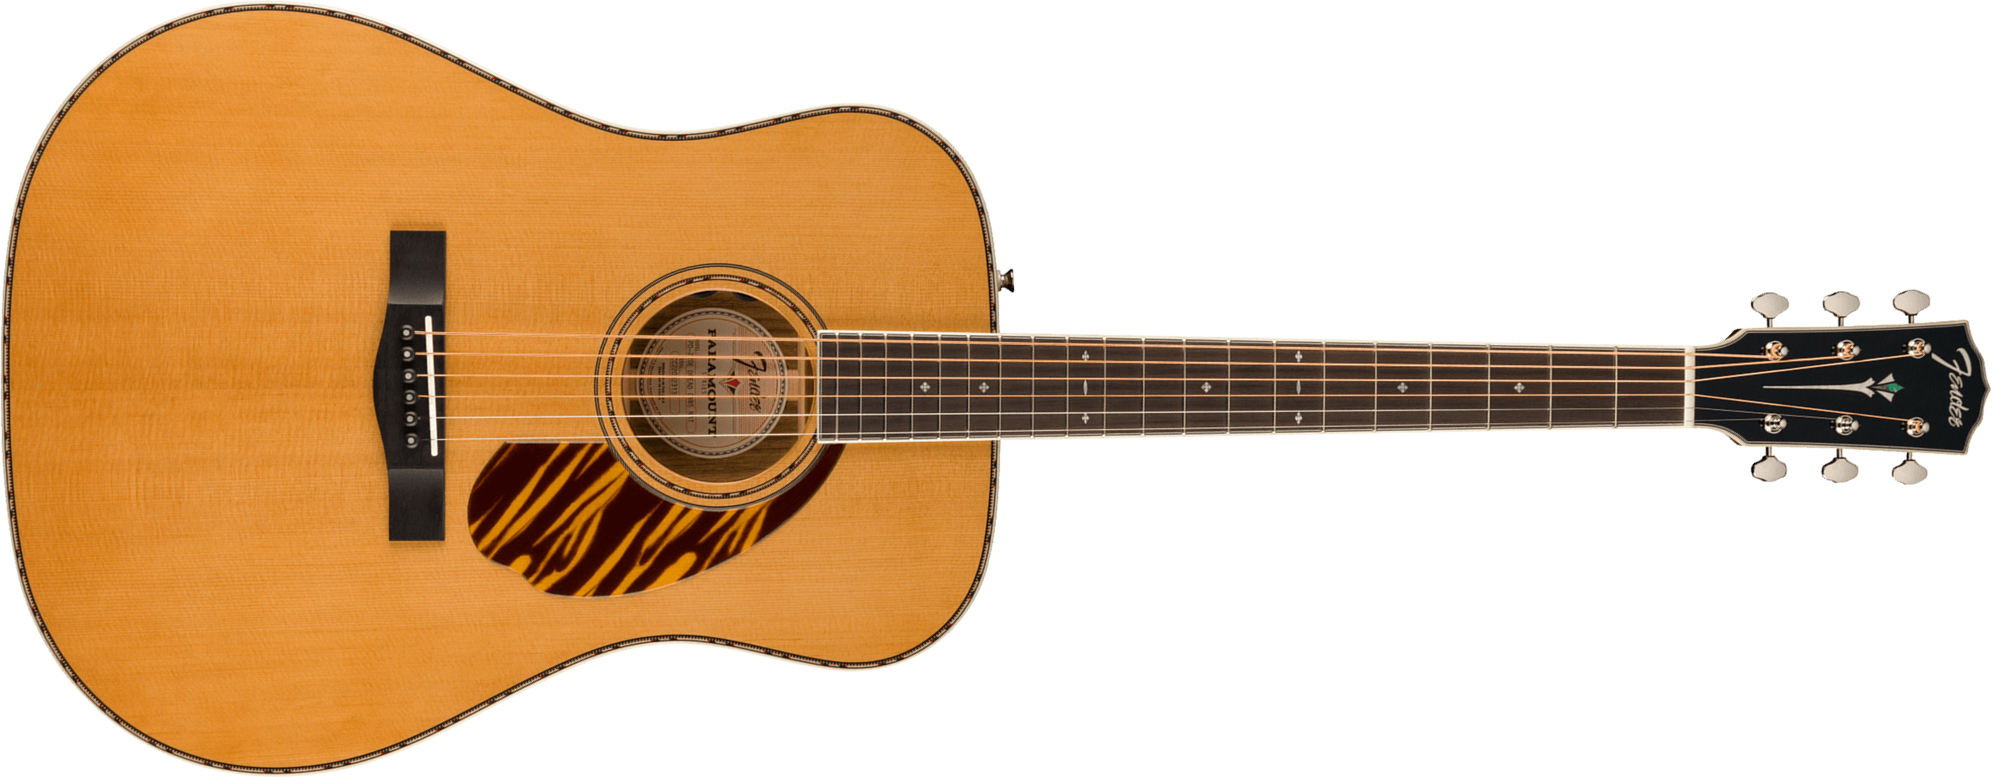 Fender Pd-220e Paramount Fsr Ltd Dreadnought Epicea Ovangkol Ova - Aged Natural - Elektroakustische Gitarre - Main picture